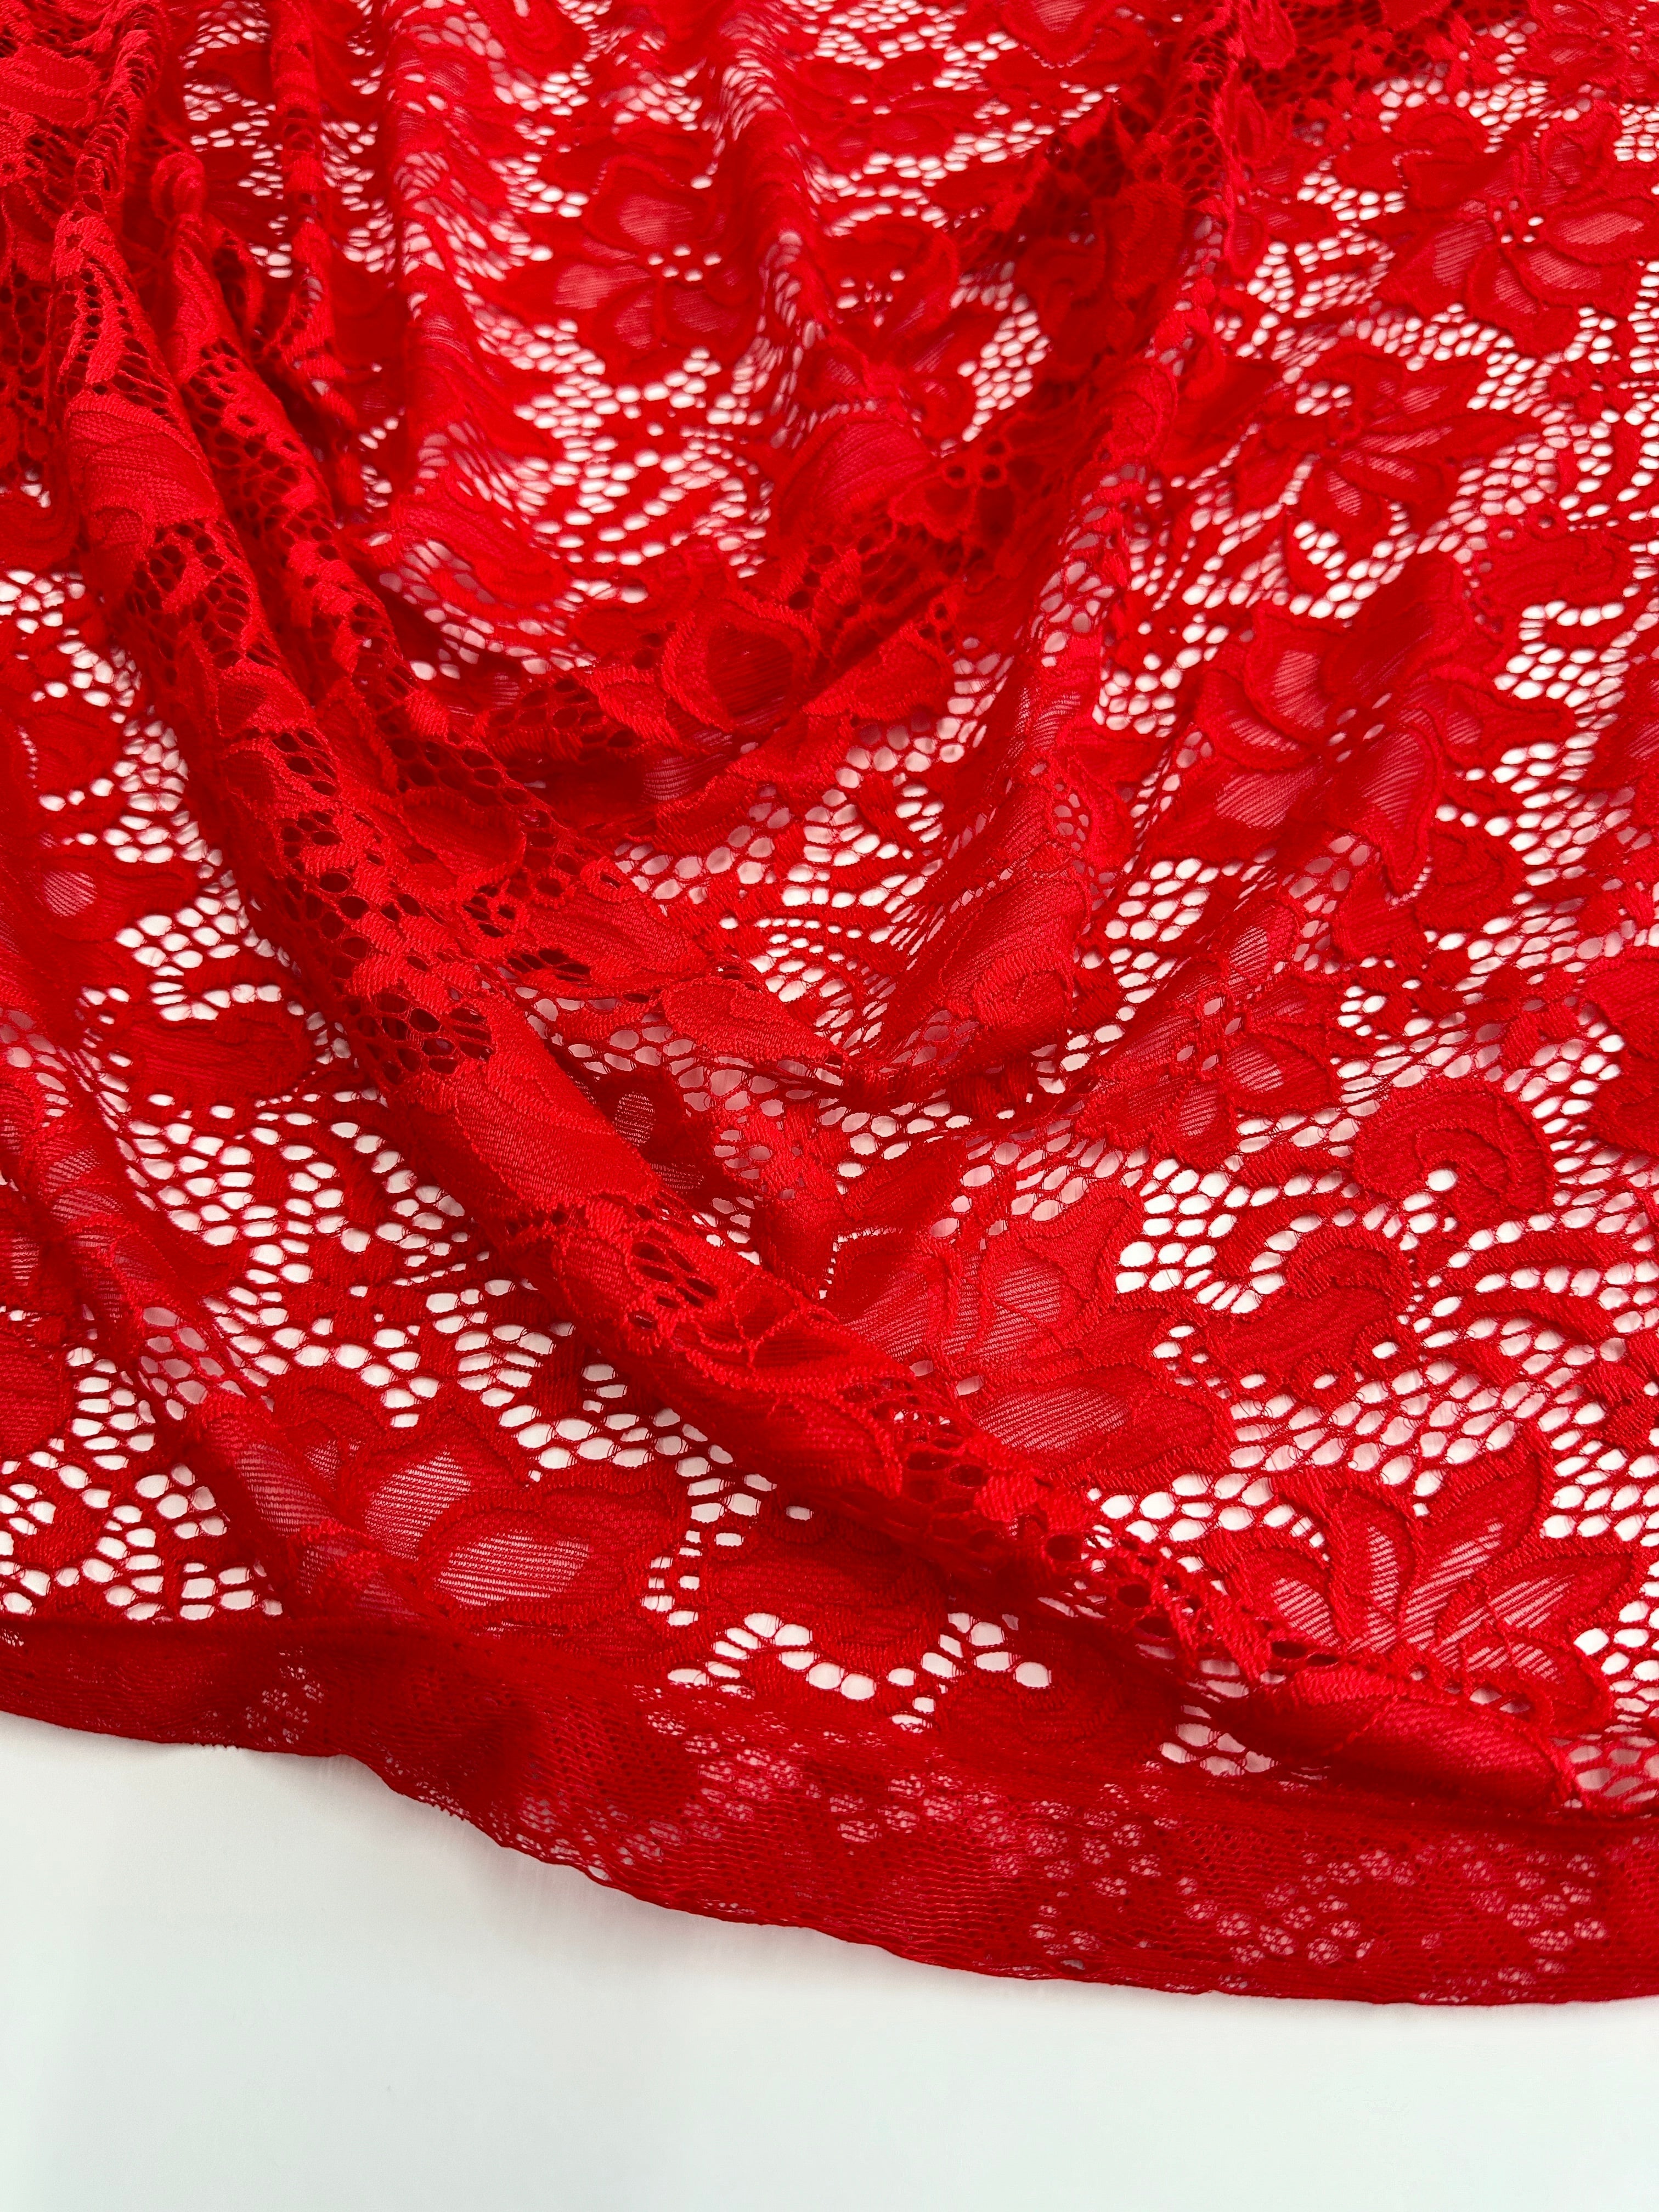 Red Floral Chantilly Lace, online textile store, sewing, fabric store, sewing store, cheap fabric store, kiki textiles